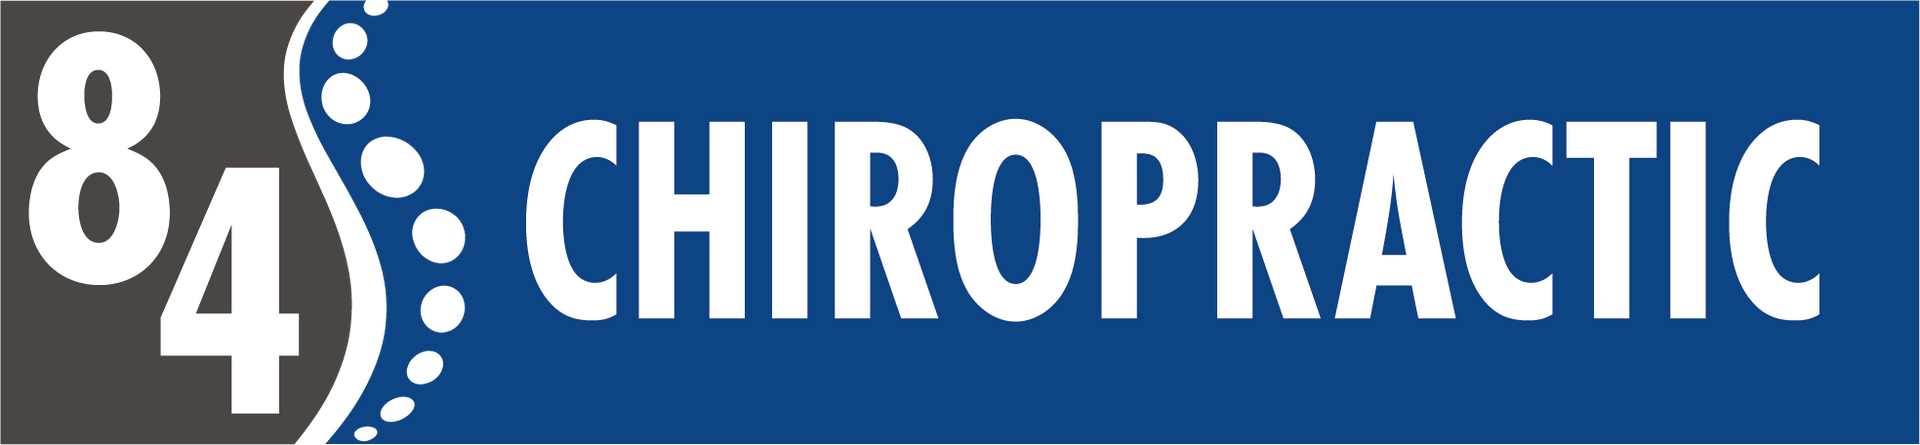 84 Chiropractic Center - Logo